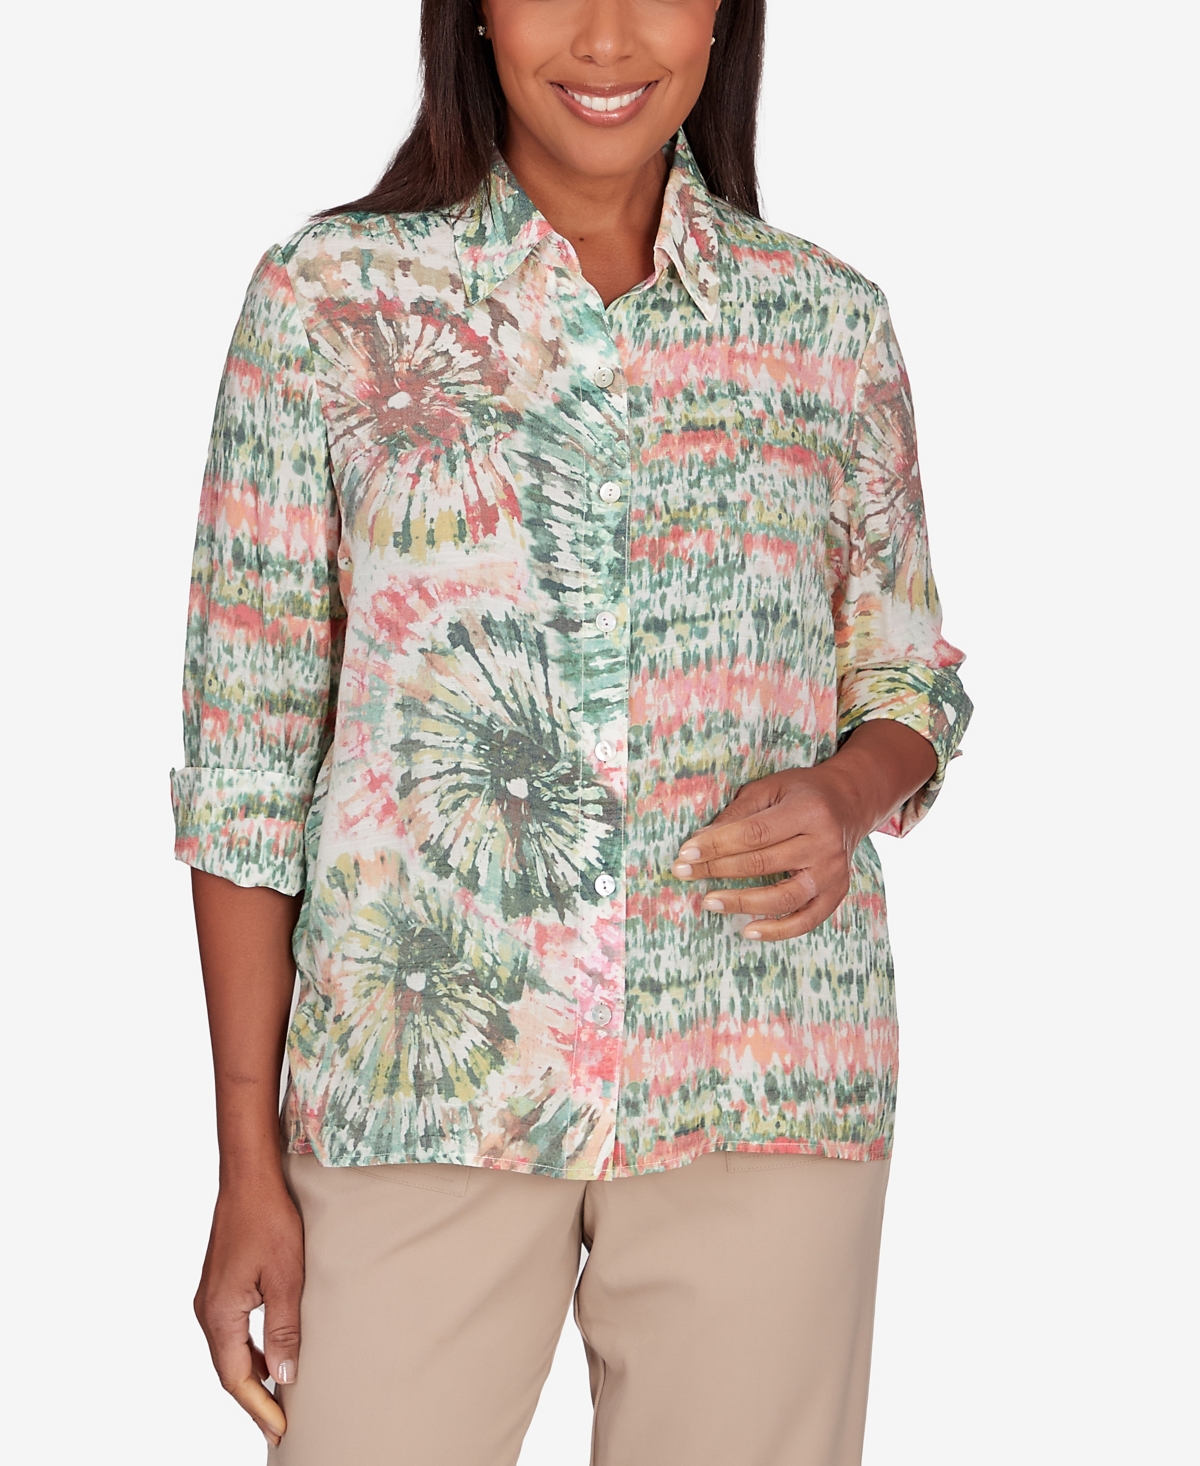 Women's Tuscan Sunset Tie Dye Button Down Blouse Top - Multi